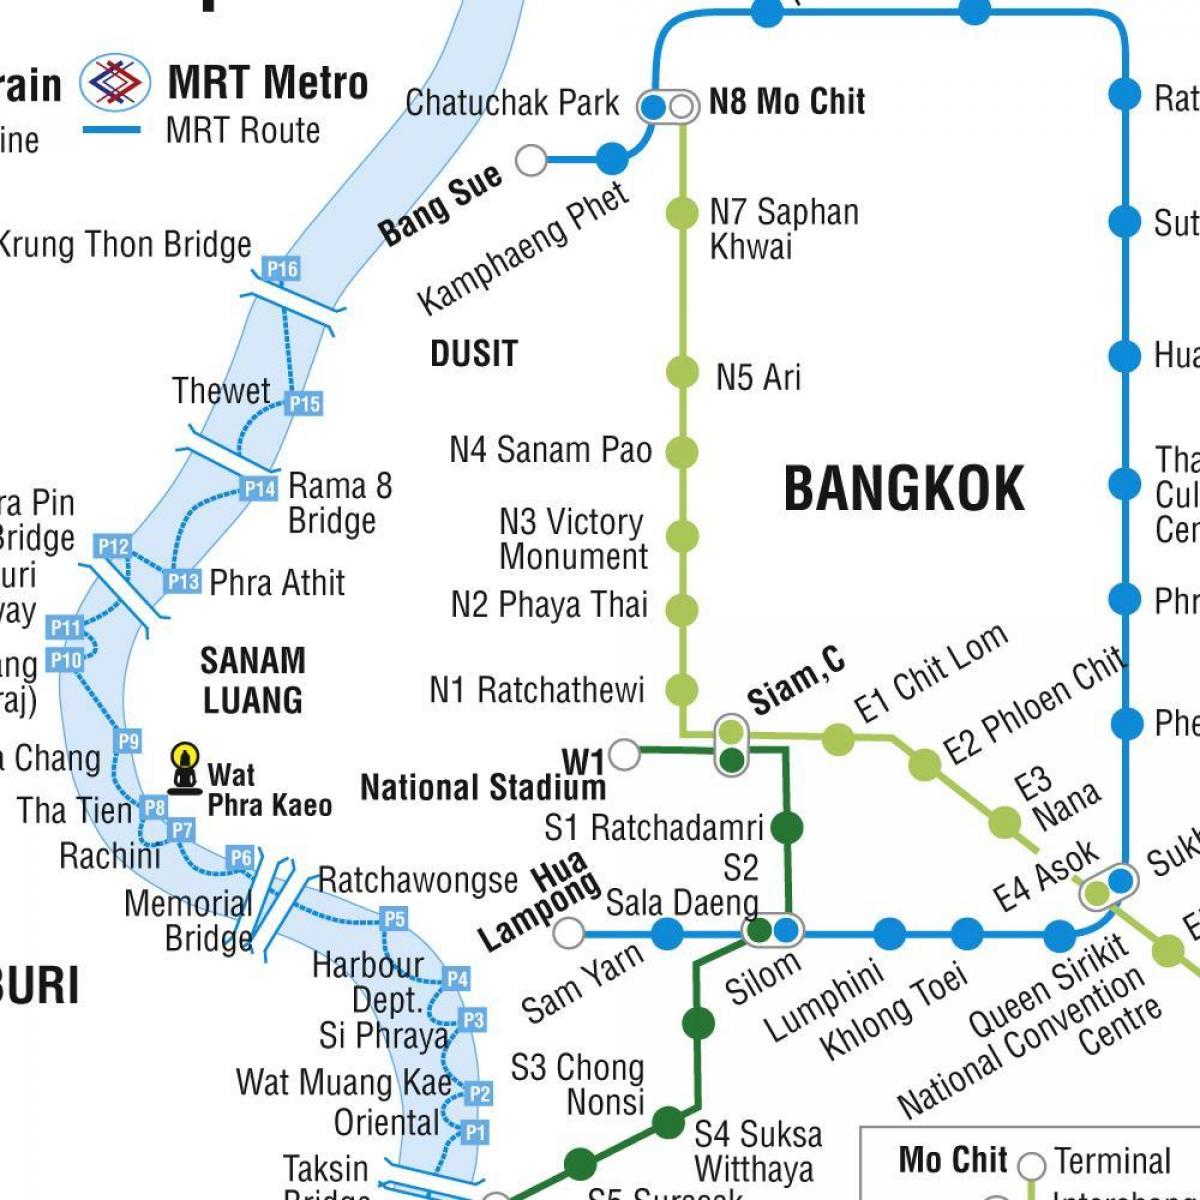 карта на бангкок метро и skytrain